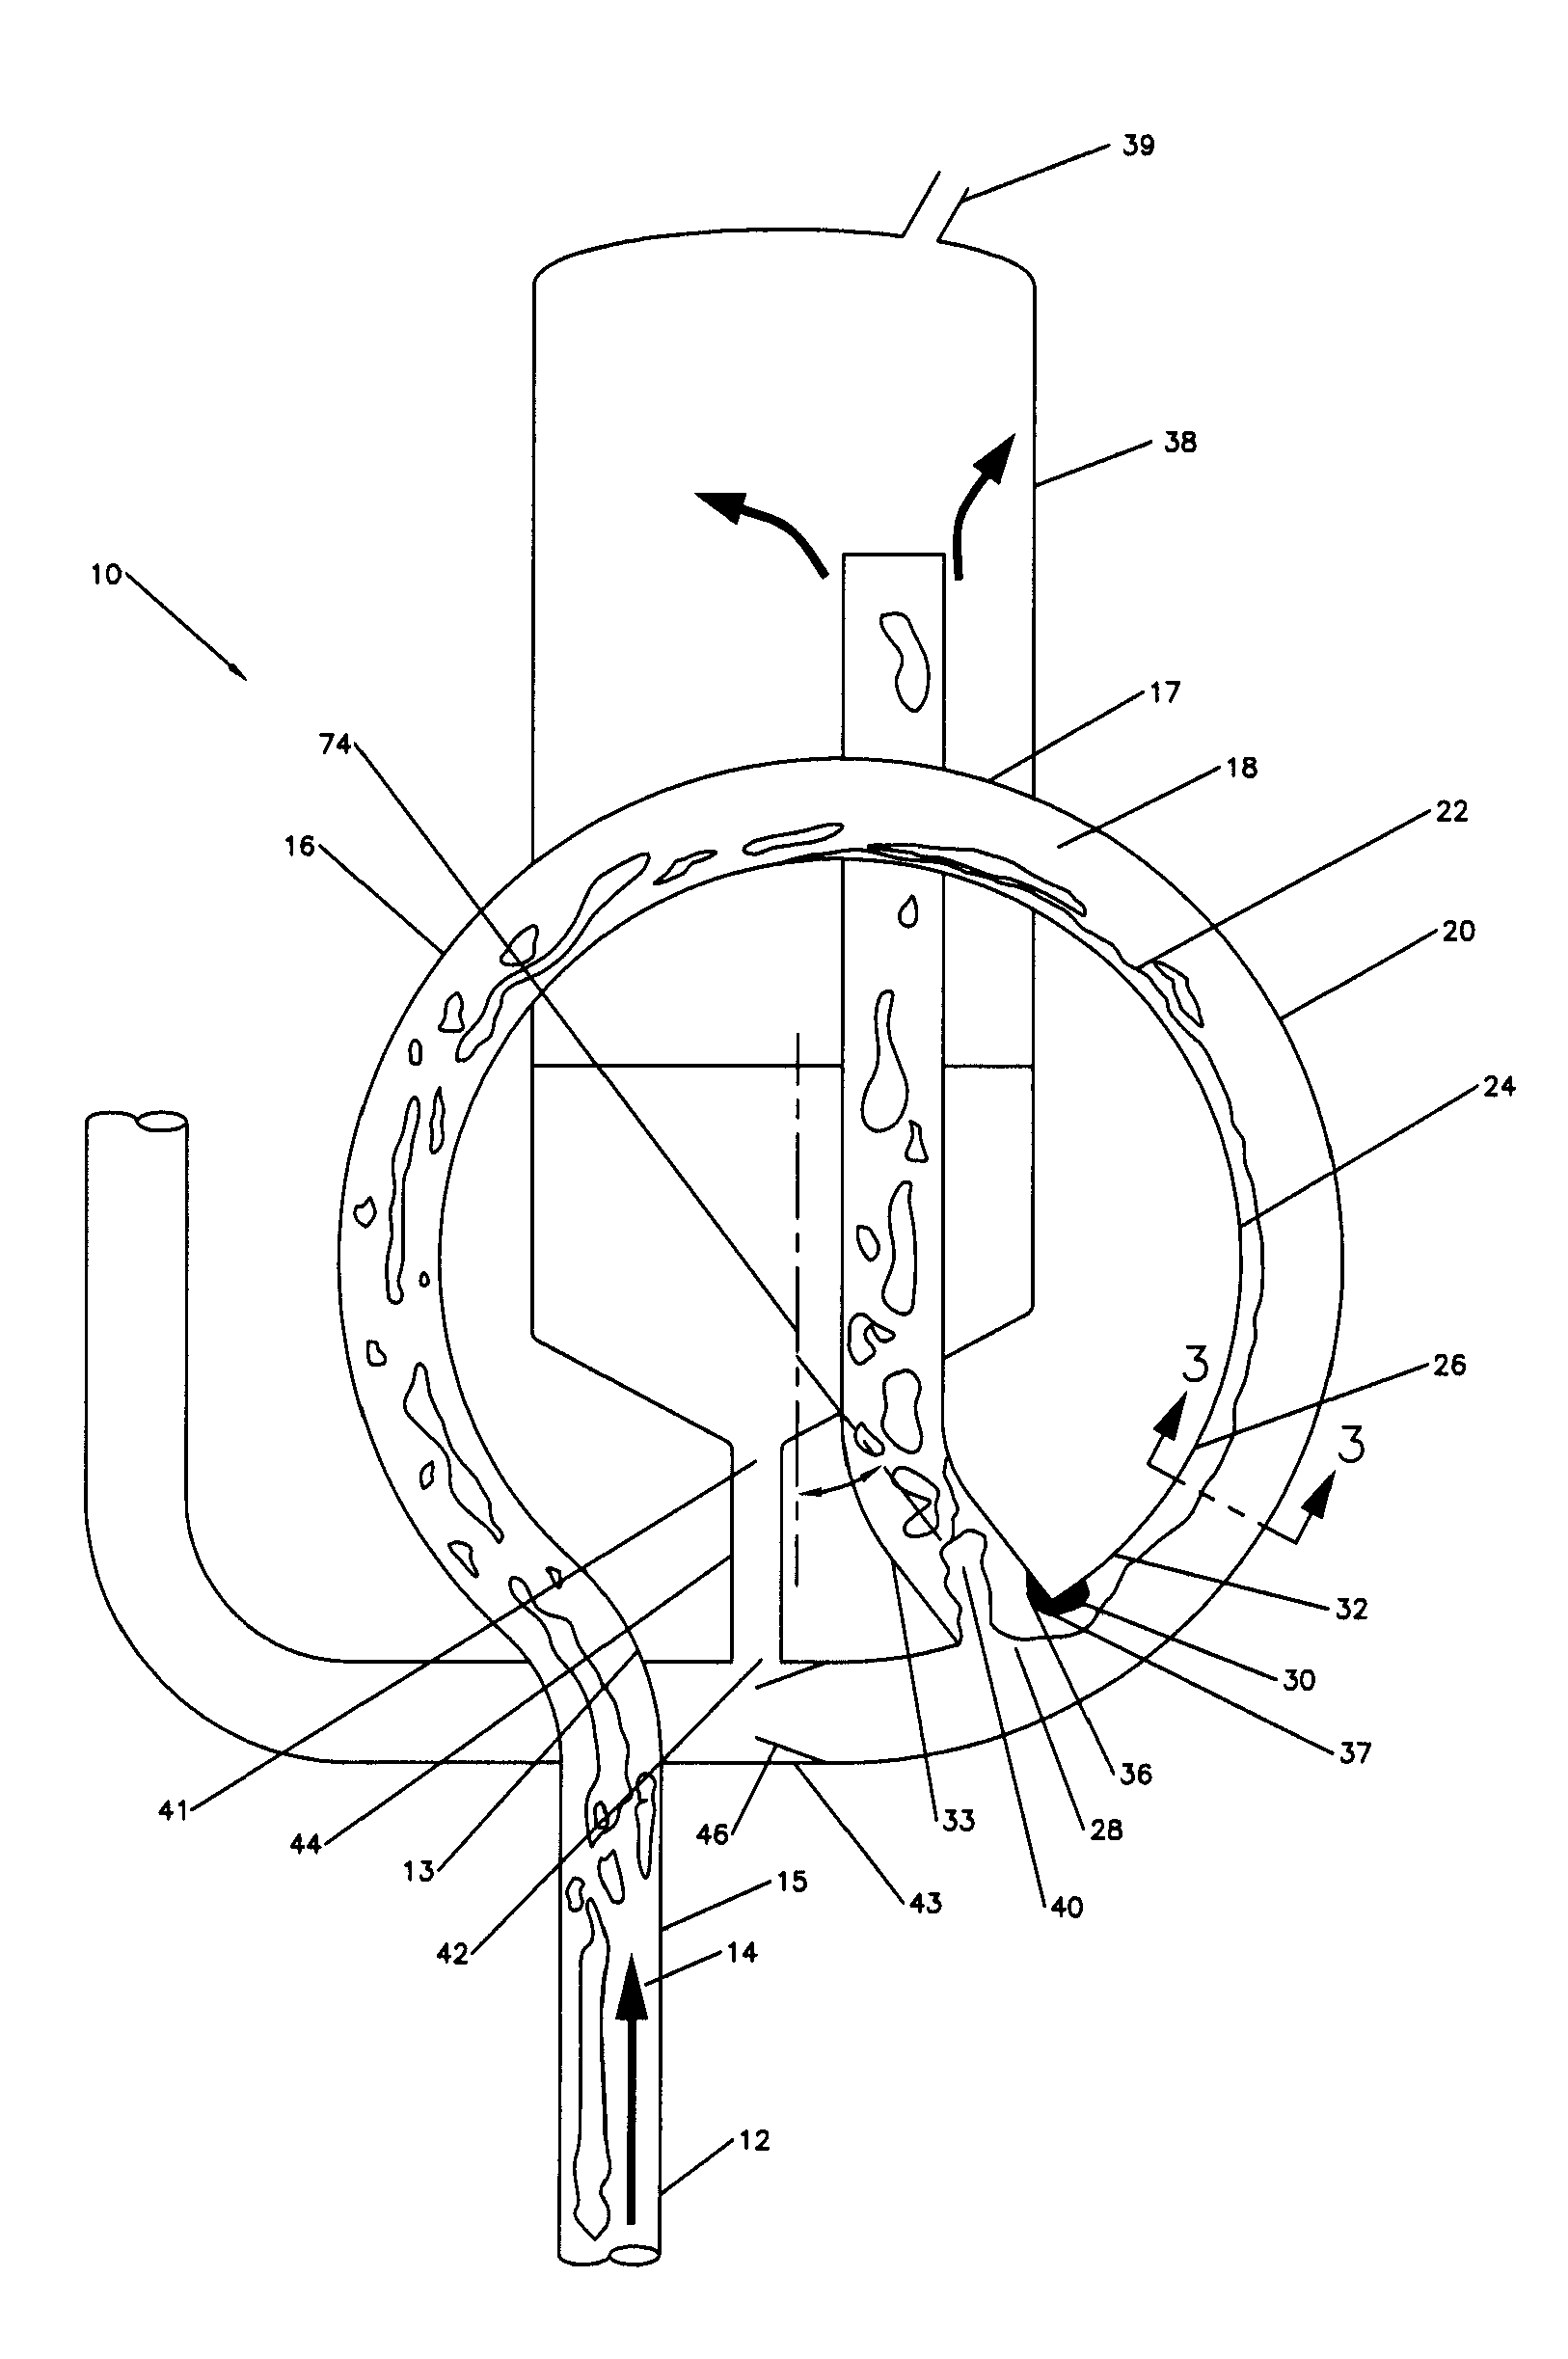 Apparatus and method for gas-liquid separation